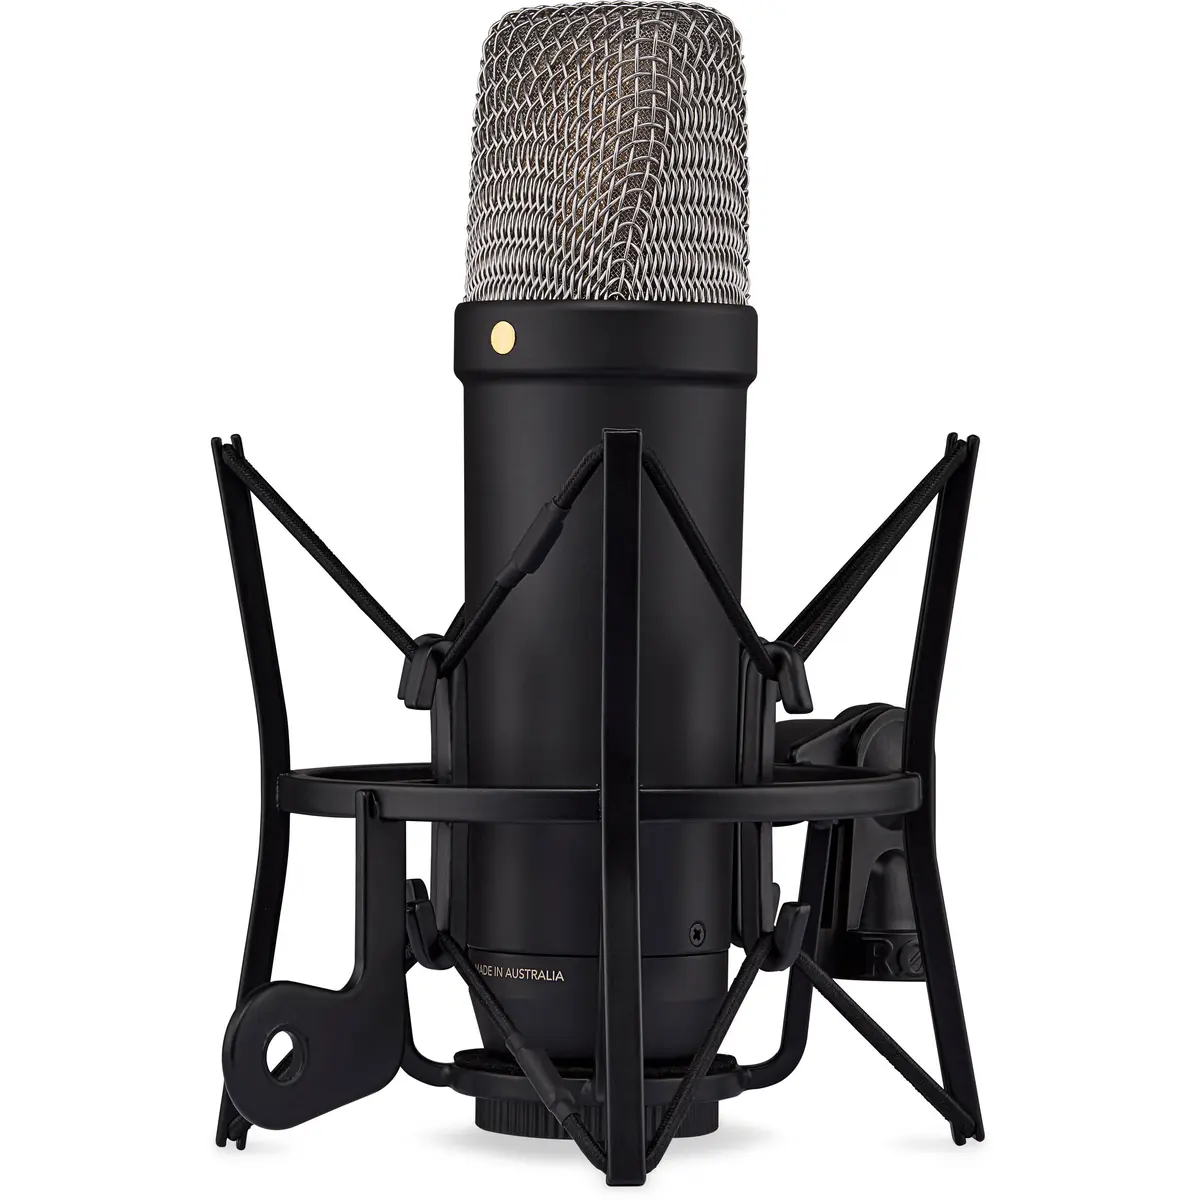 1. Rode NT1 5th Generation Hybrid Microphone (Black)